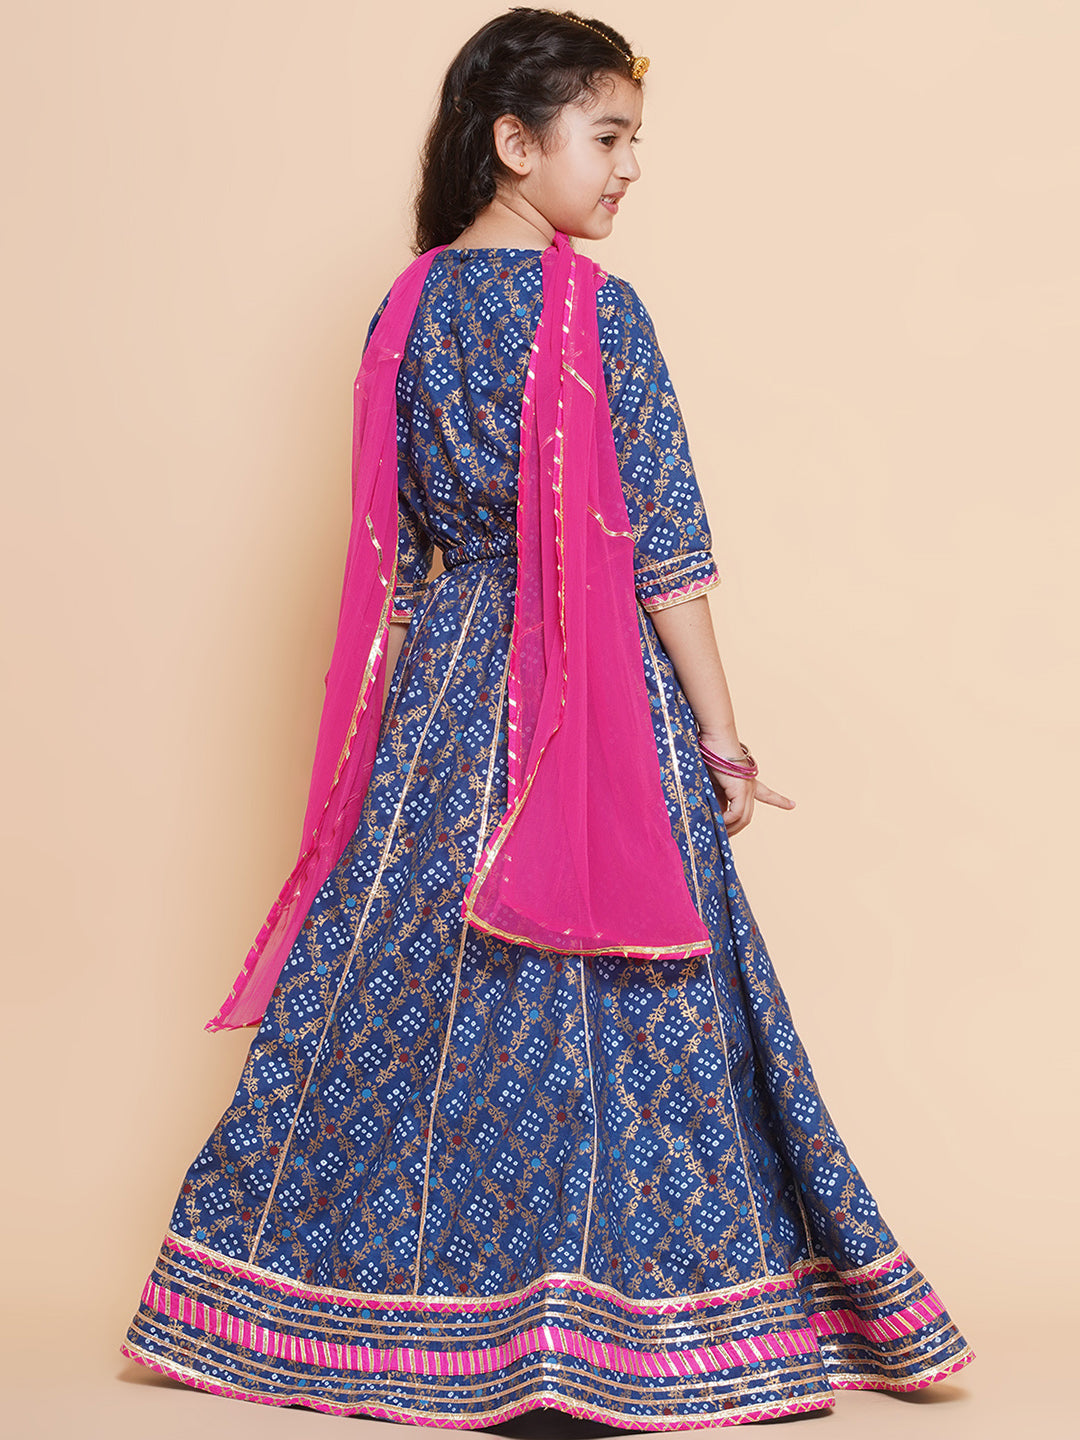 Girls Blue & Pink Printed Ready To Wear Lehenga & Blouse With Dupatta - Bitiya By Bhama